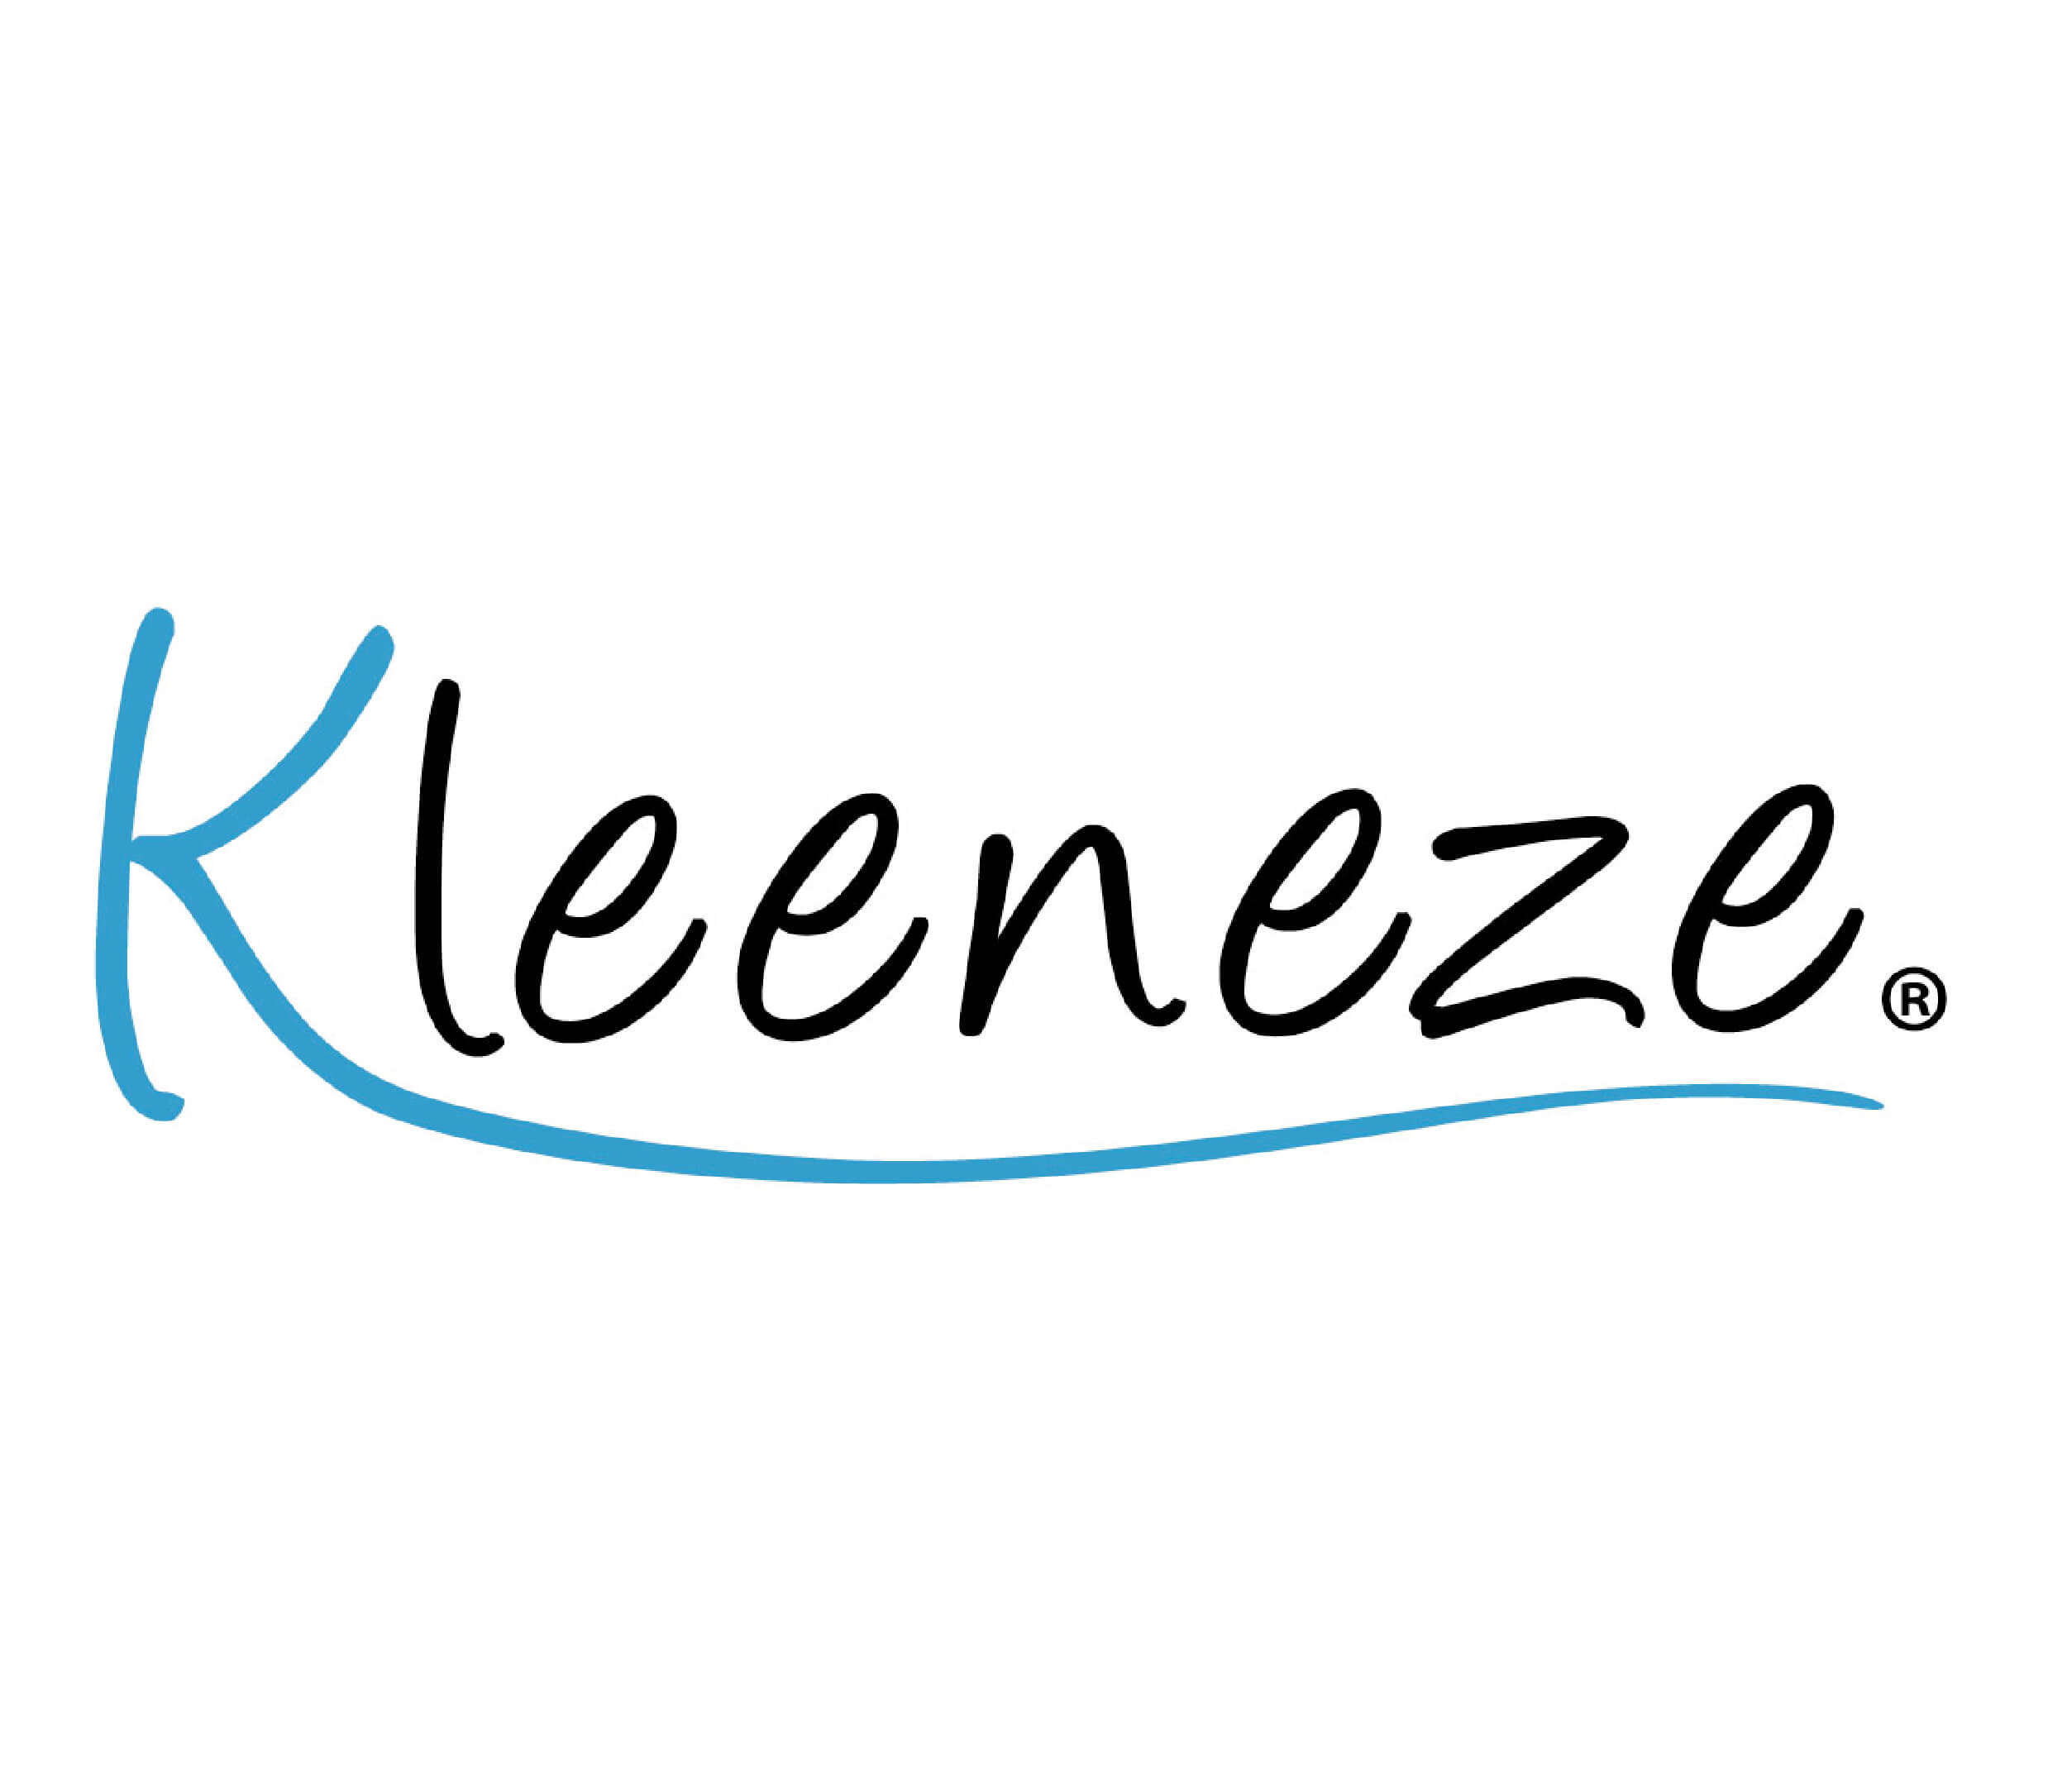 Purchase of Kleeneze Brand